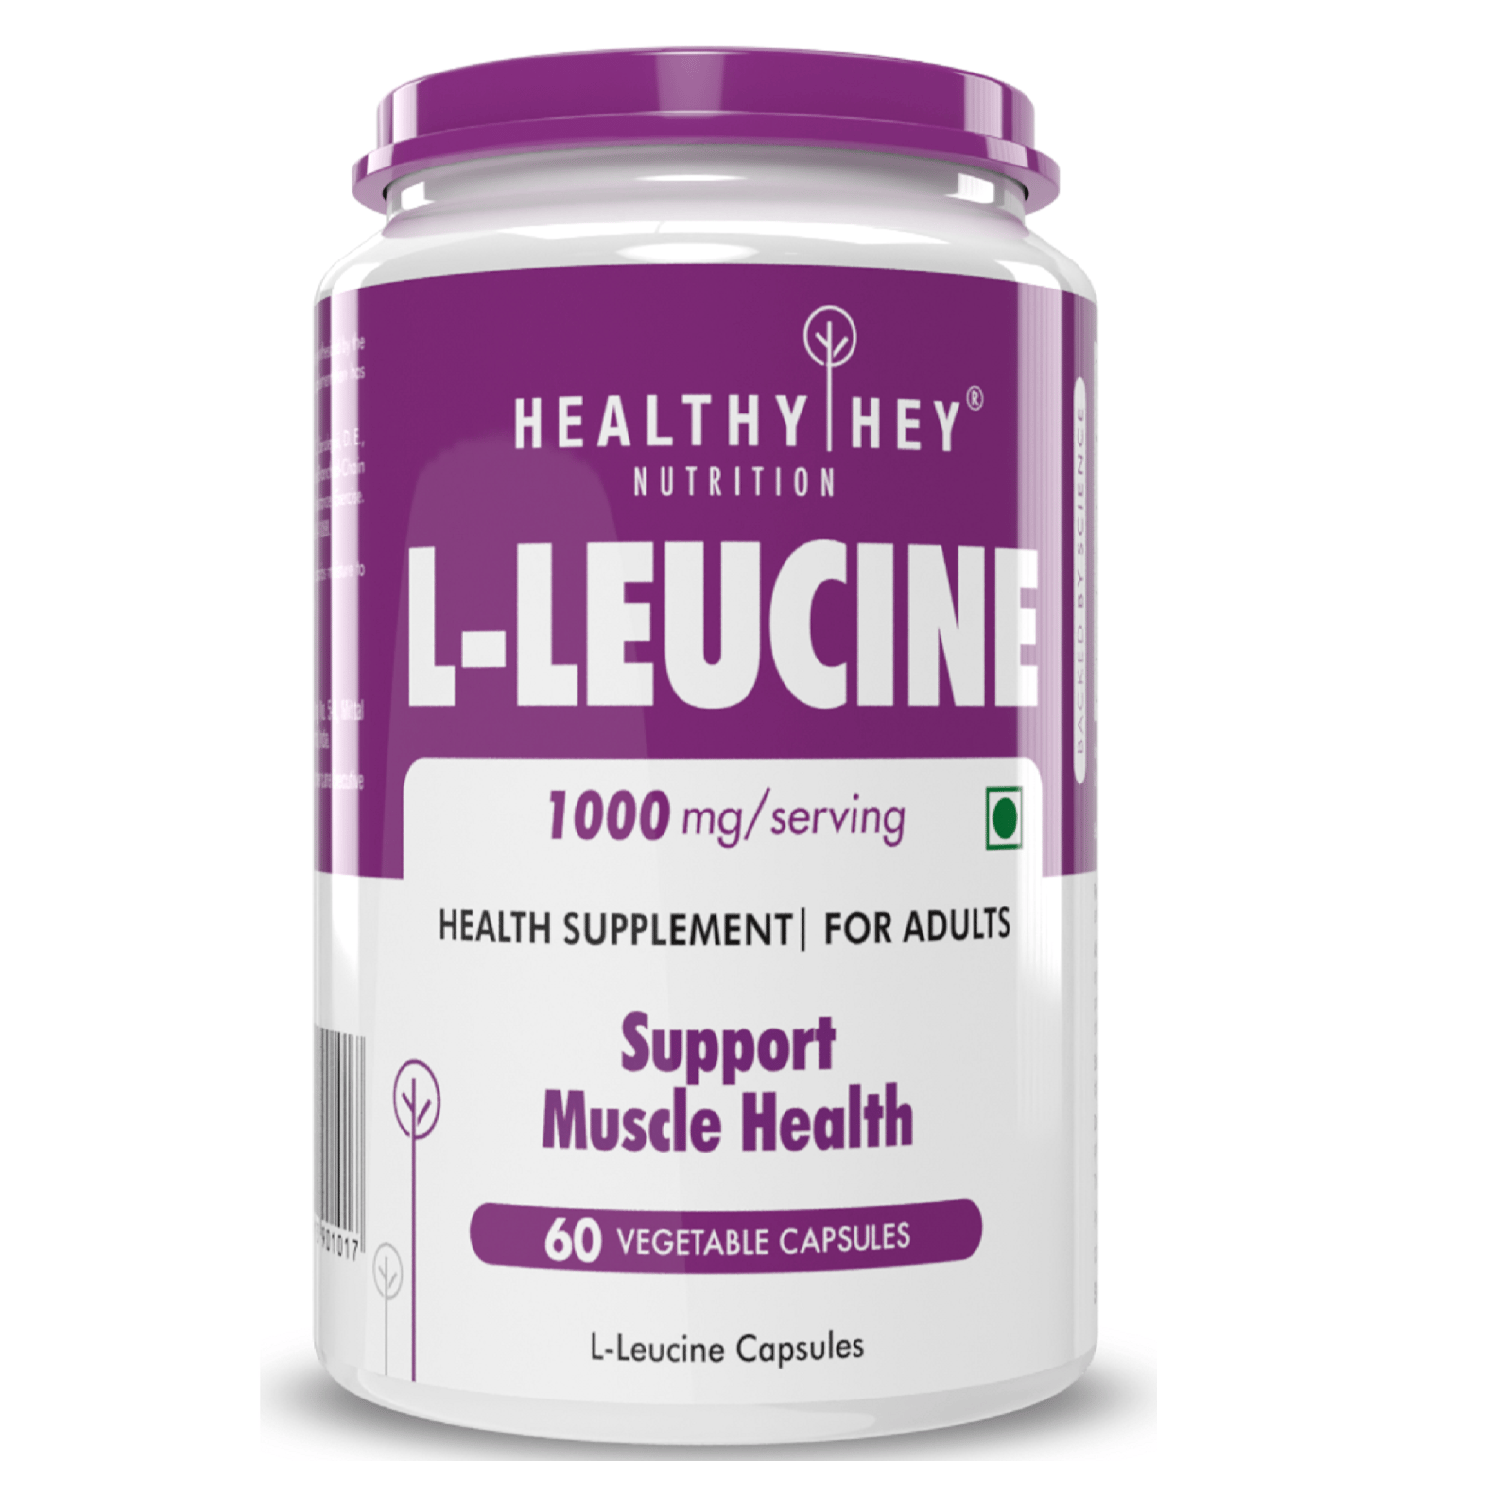 Healthyhey Nutrition L-Leucine  60 capsules